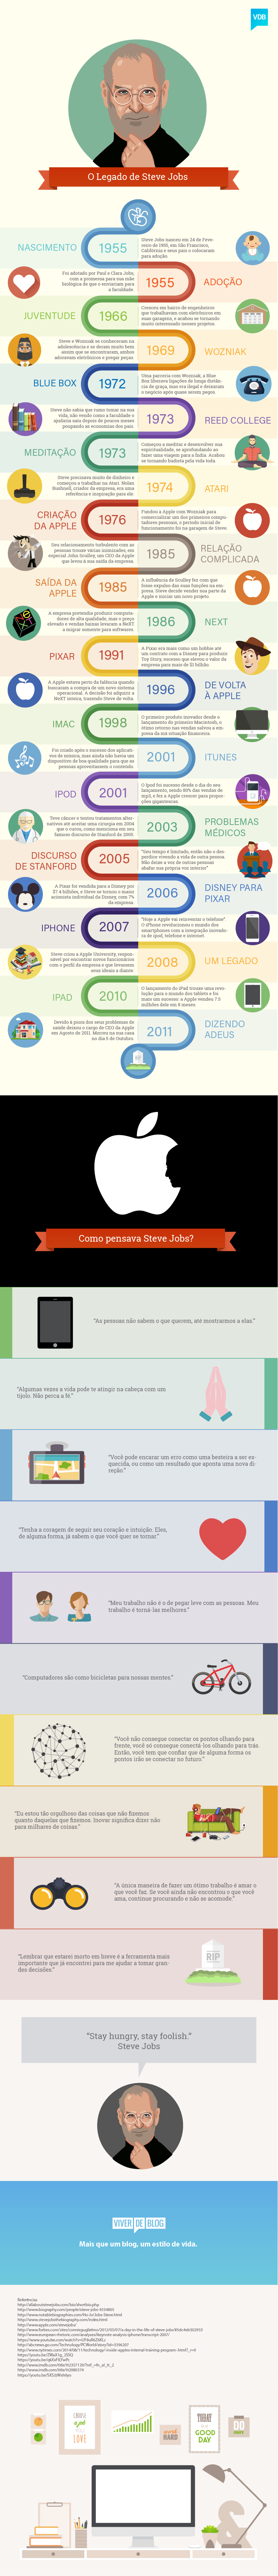 Infográfico Steve Jobs